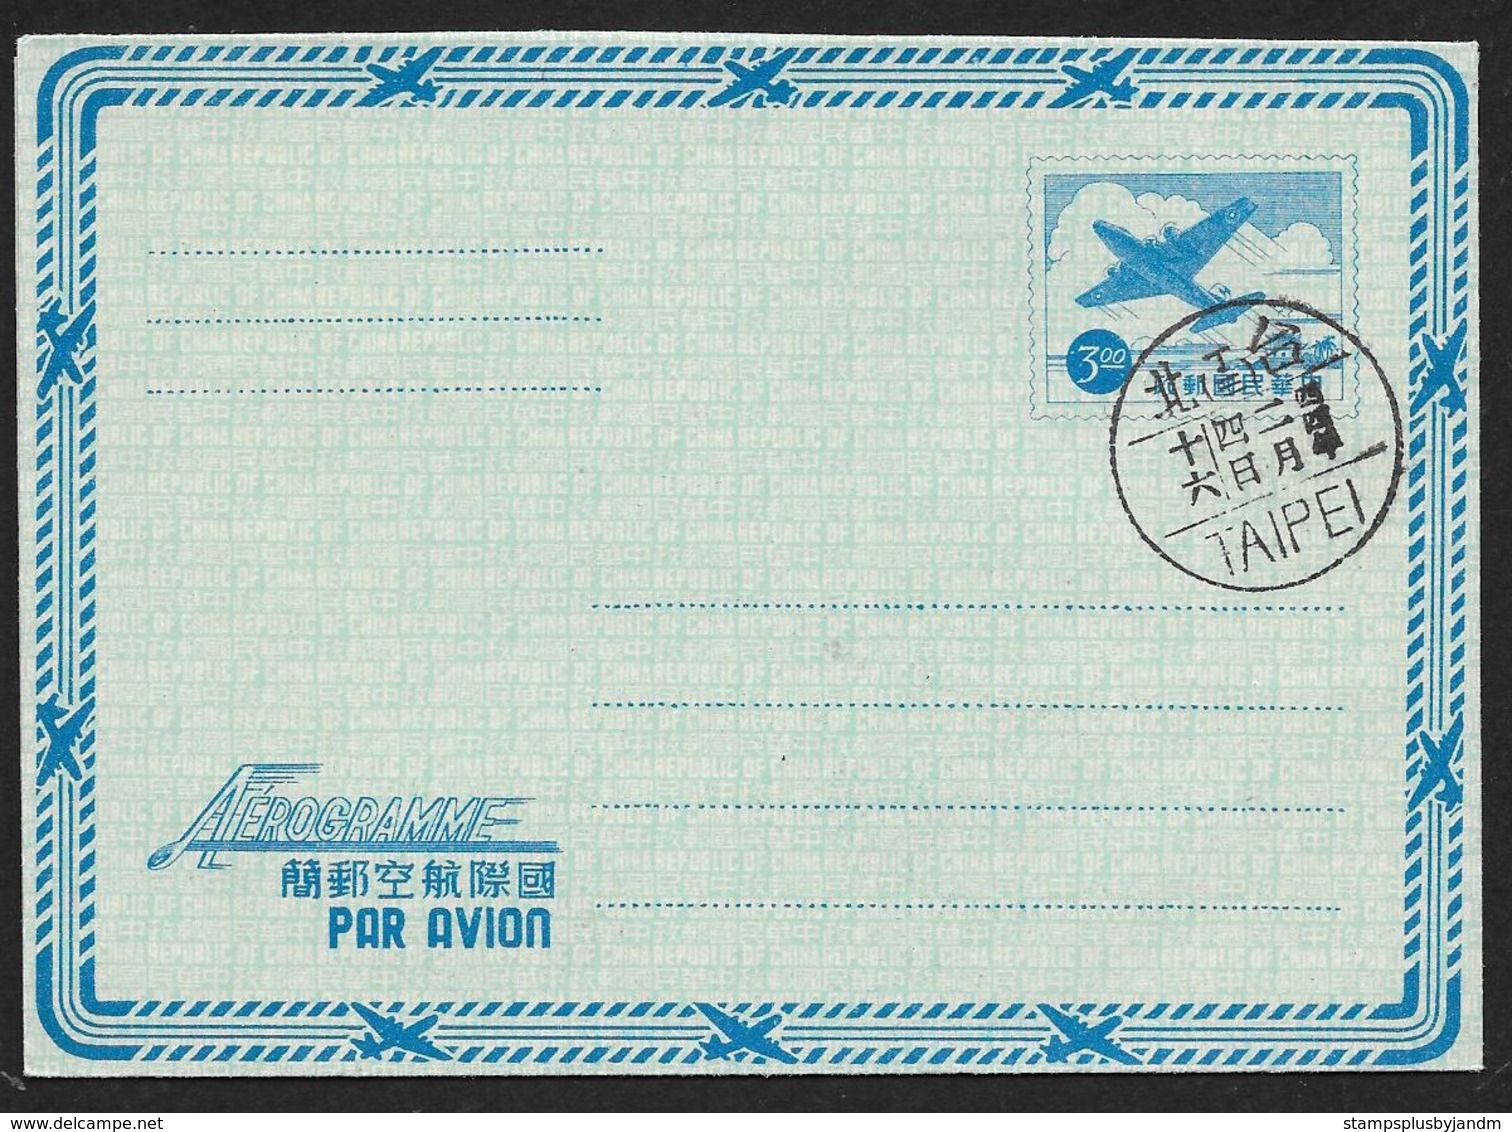 REPUBLIC OF CHINA (TAIWAN) Aerogramme $3 Airplane C1950-1960s Taipei Cancel! STK#X21229 - Entiers Postaux